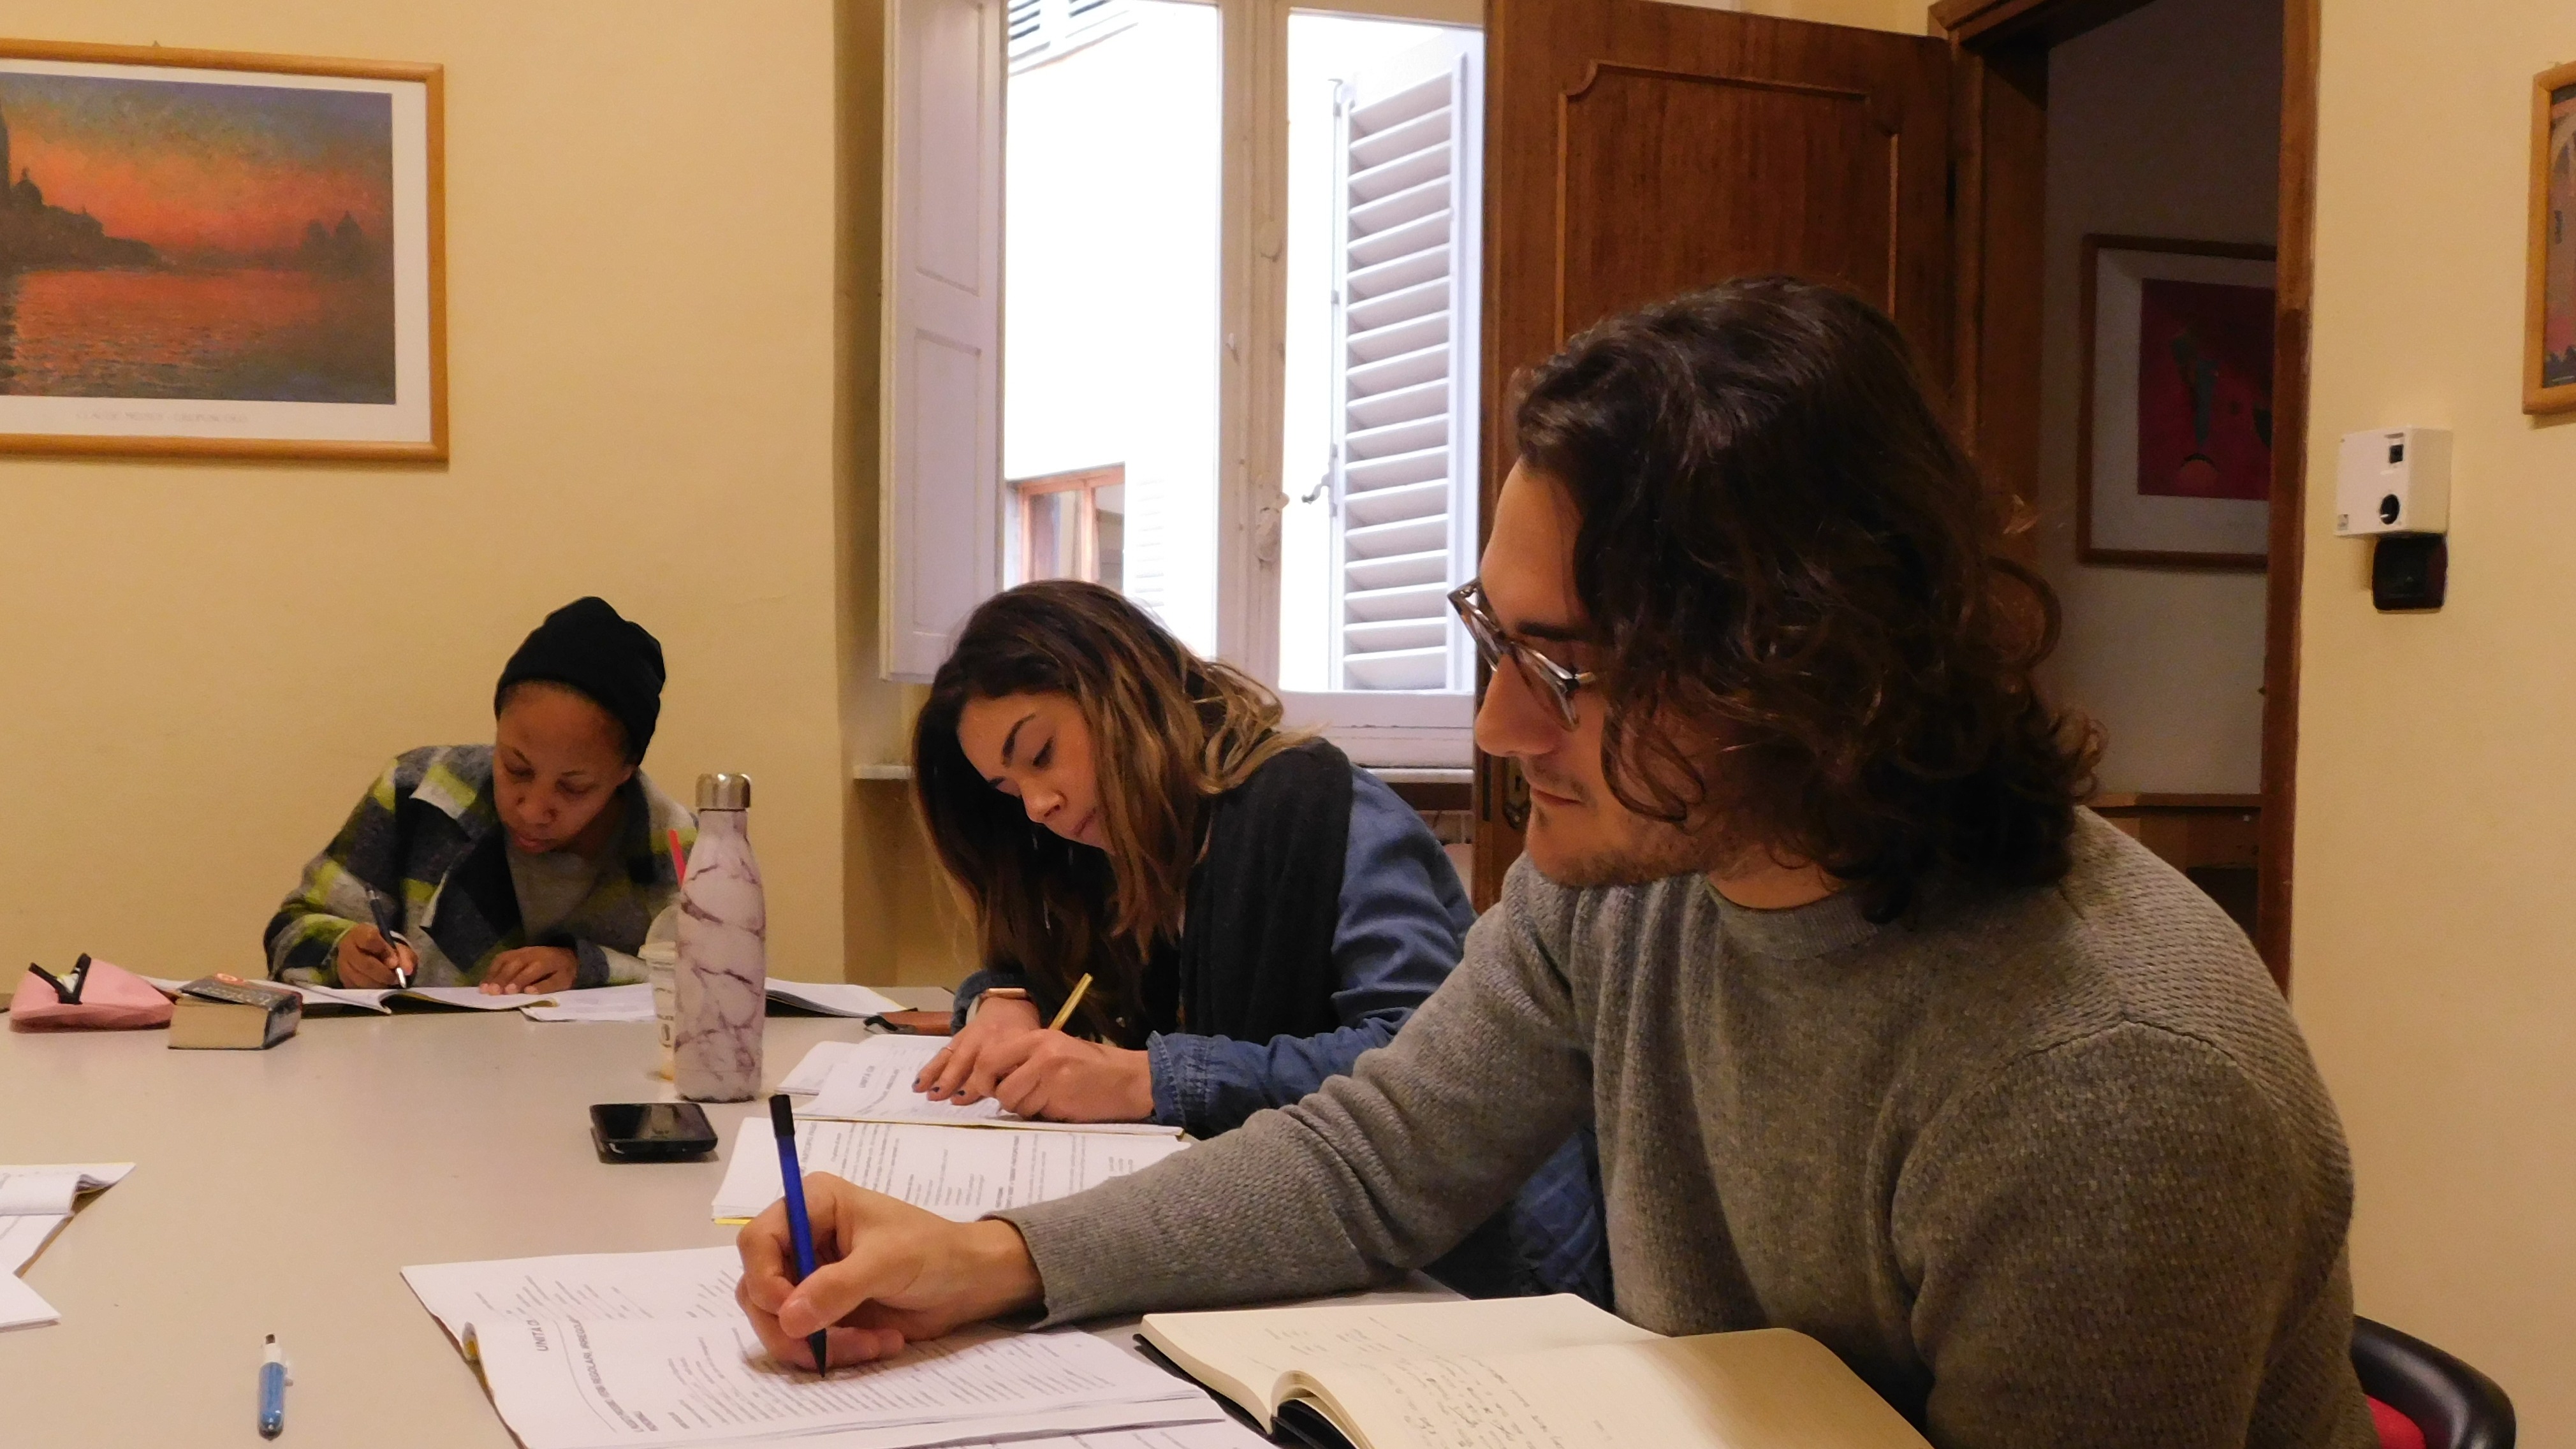 Language course at Parola Italian language school in Florence